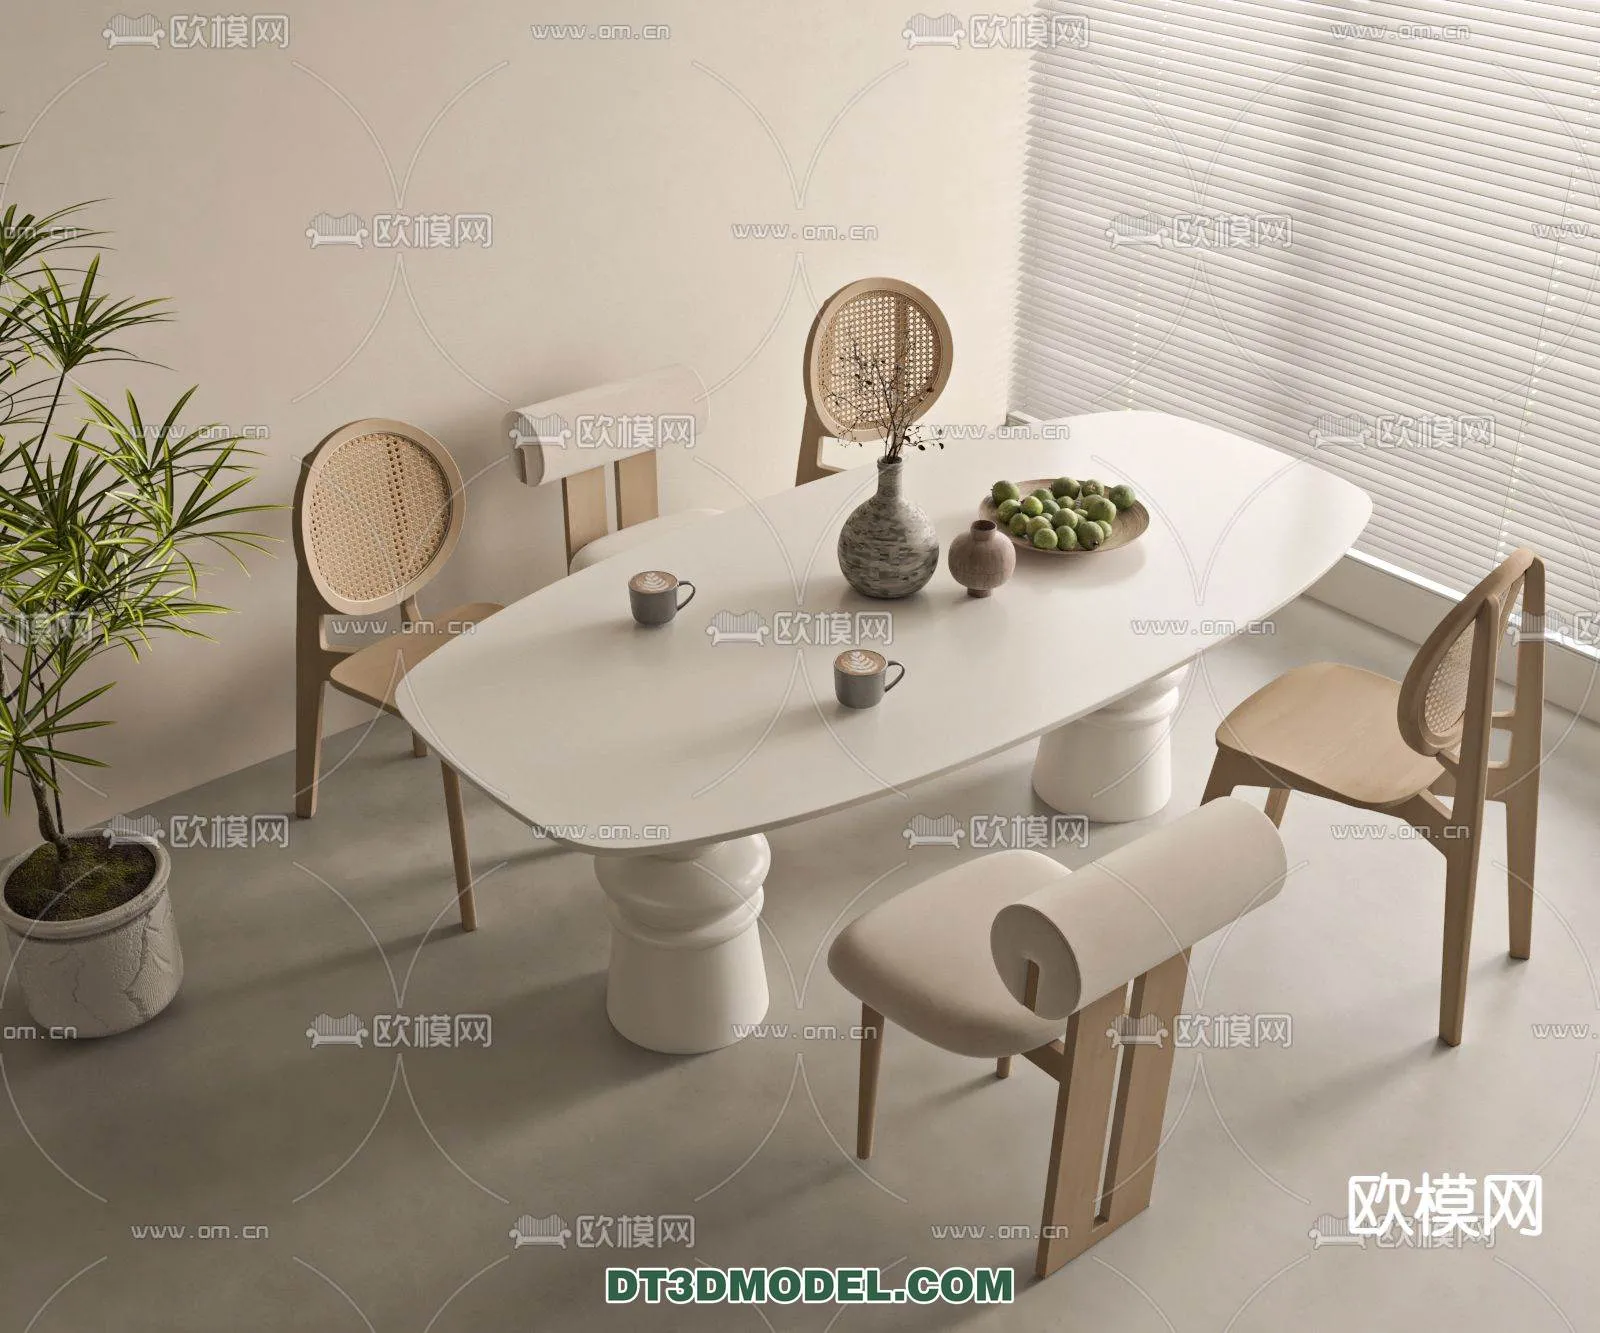 WABI SABI STYLE 3D MODELS – DINING TABLE – 0182